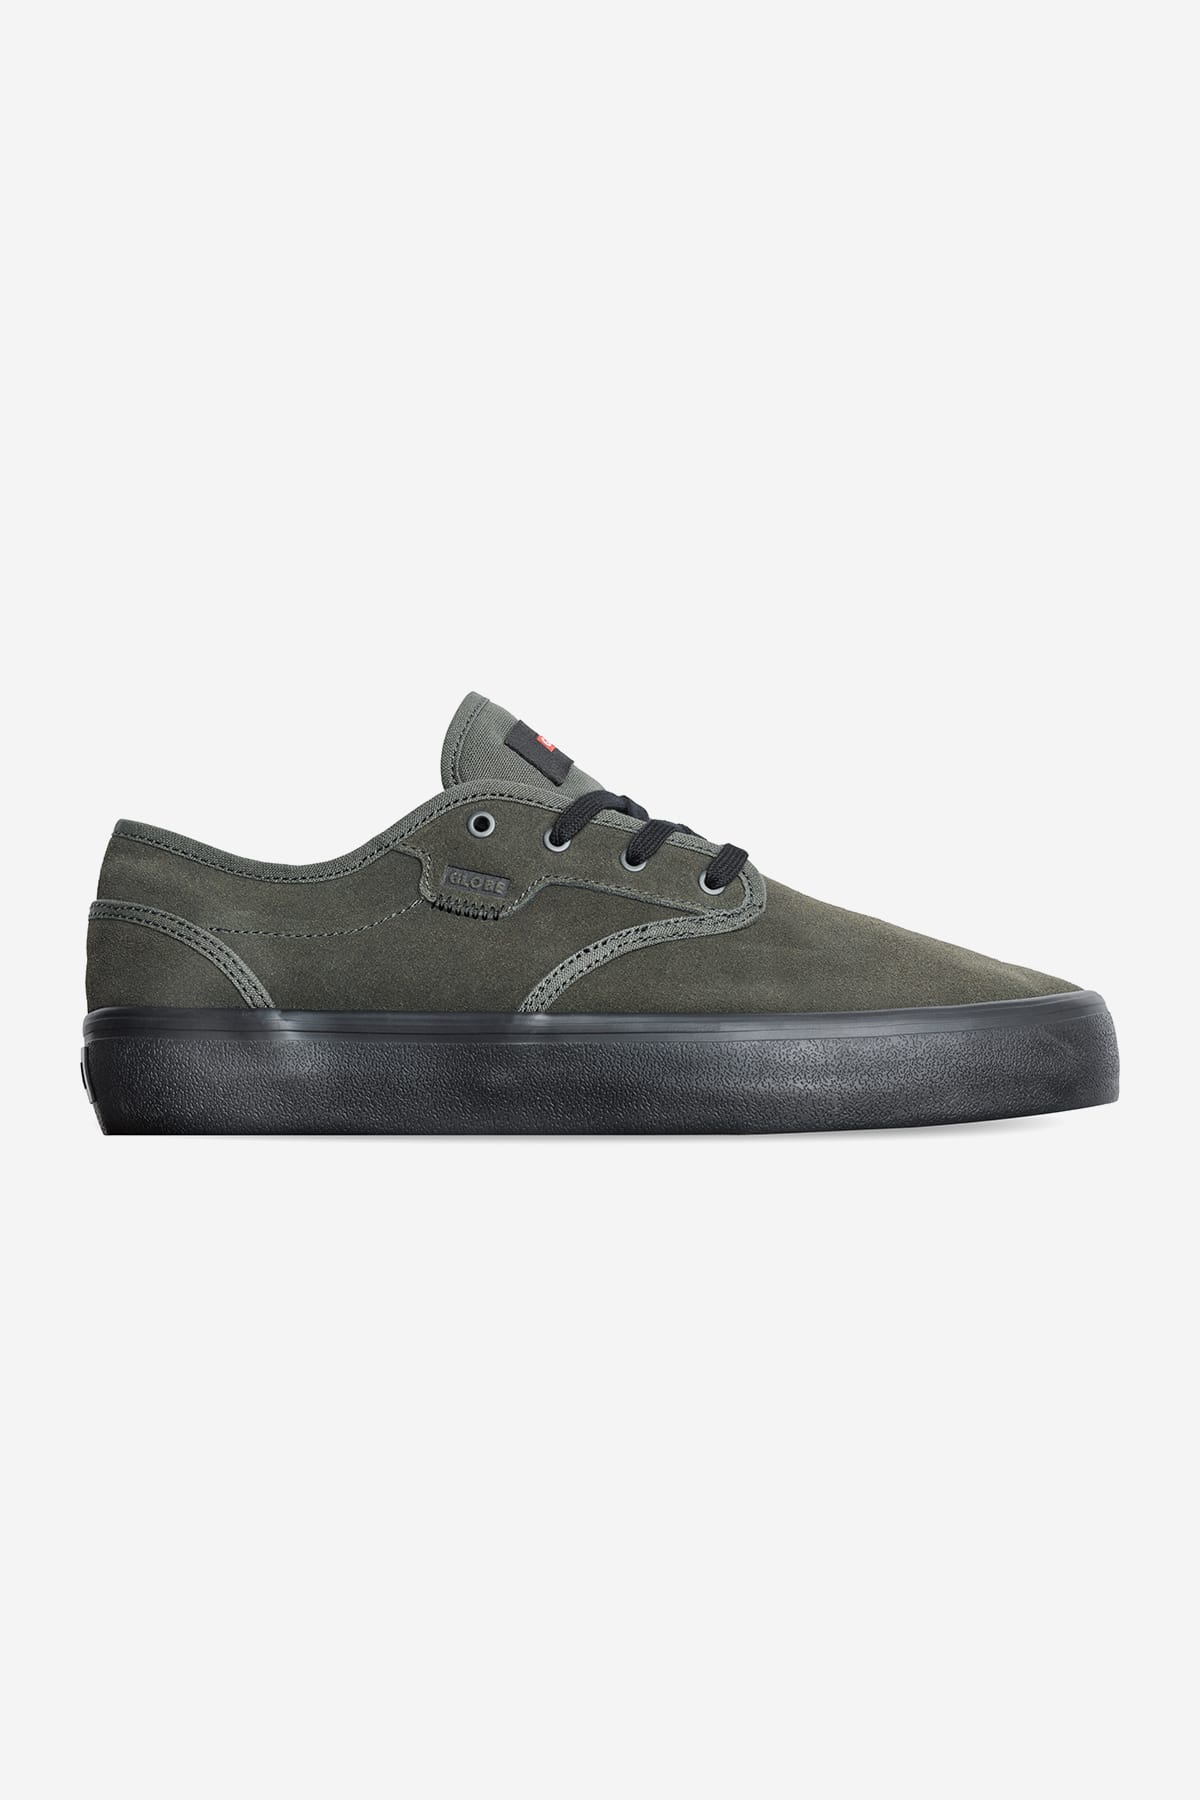 motley ii dark olive chaussures noires skateboard